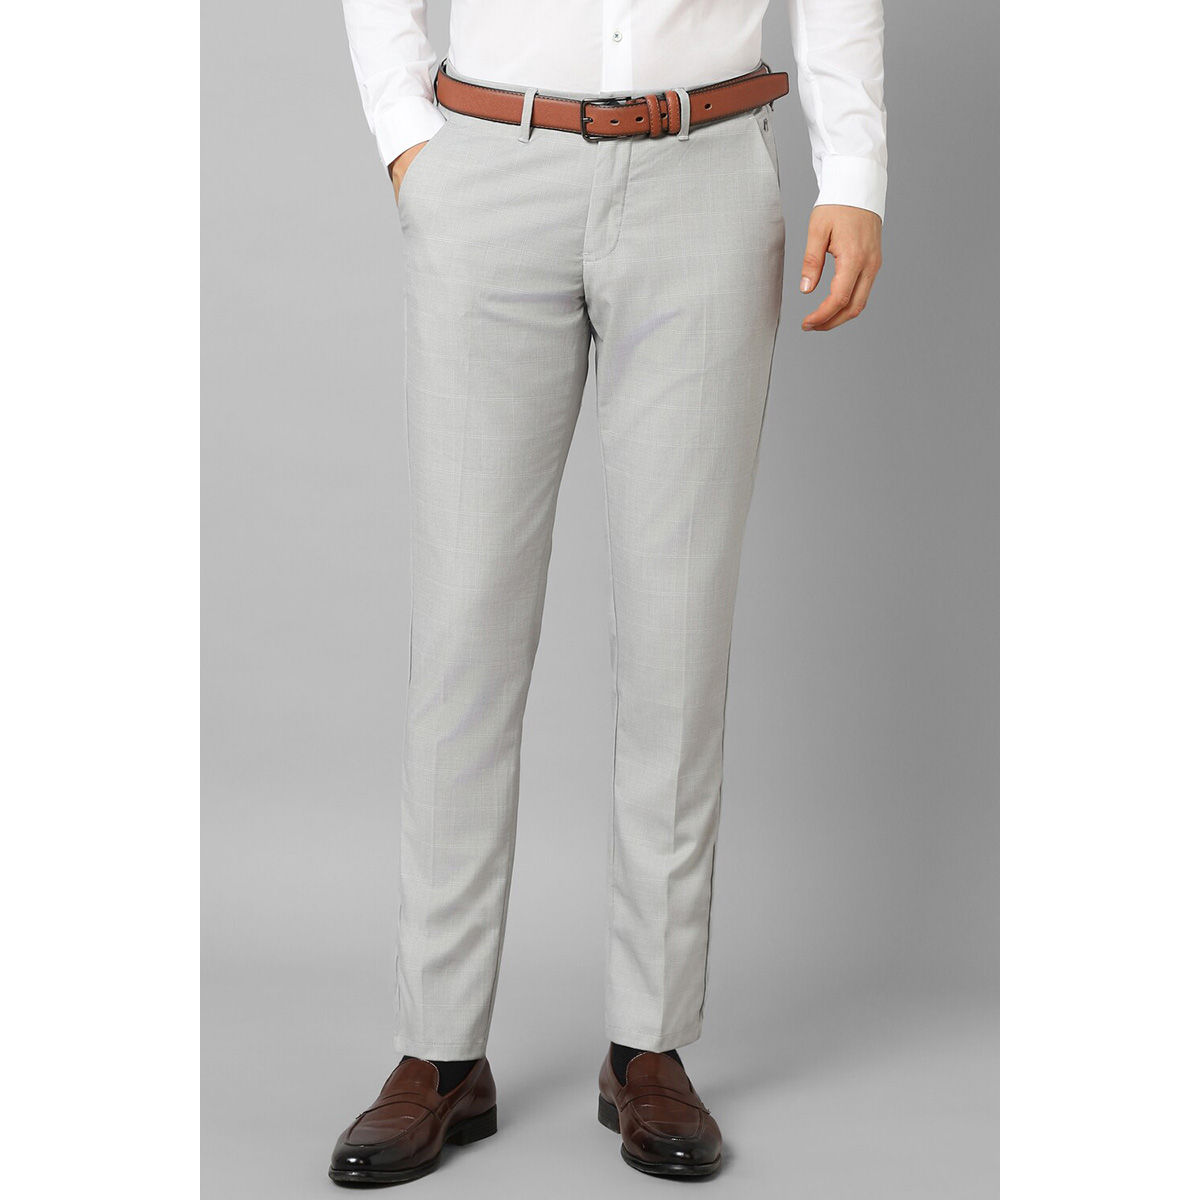 Buy Louis Philippe Men Khaki Solid Formal Trousers on Myntra |  PaisaWapas.com